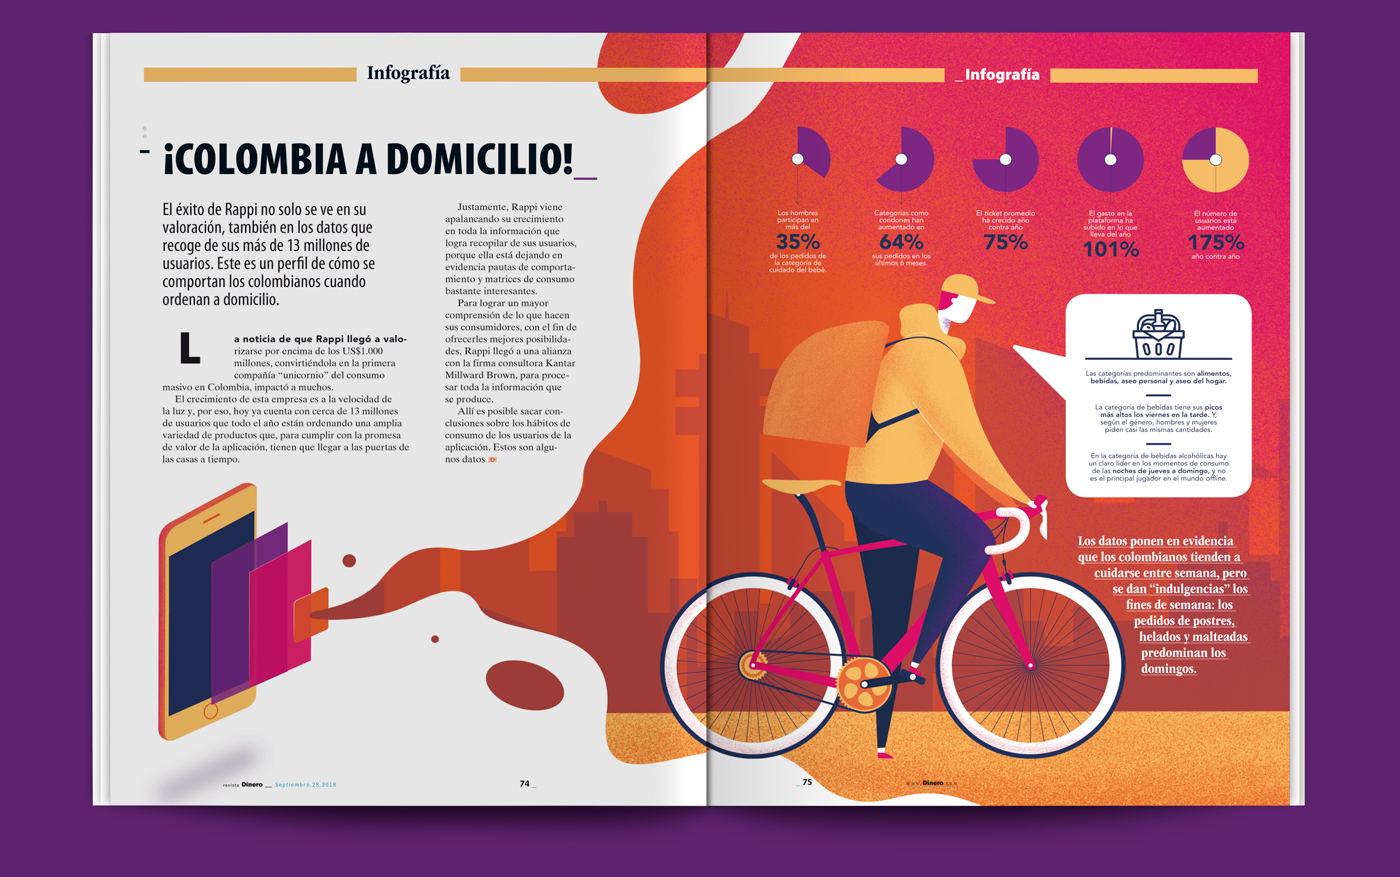 infografia ilustracion revistadinero Dinero magazine editorial economia negocios colombia infographics